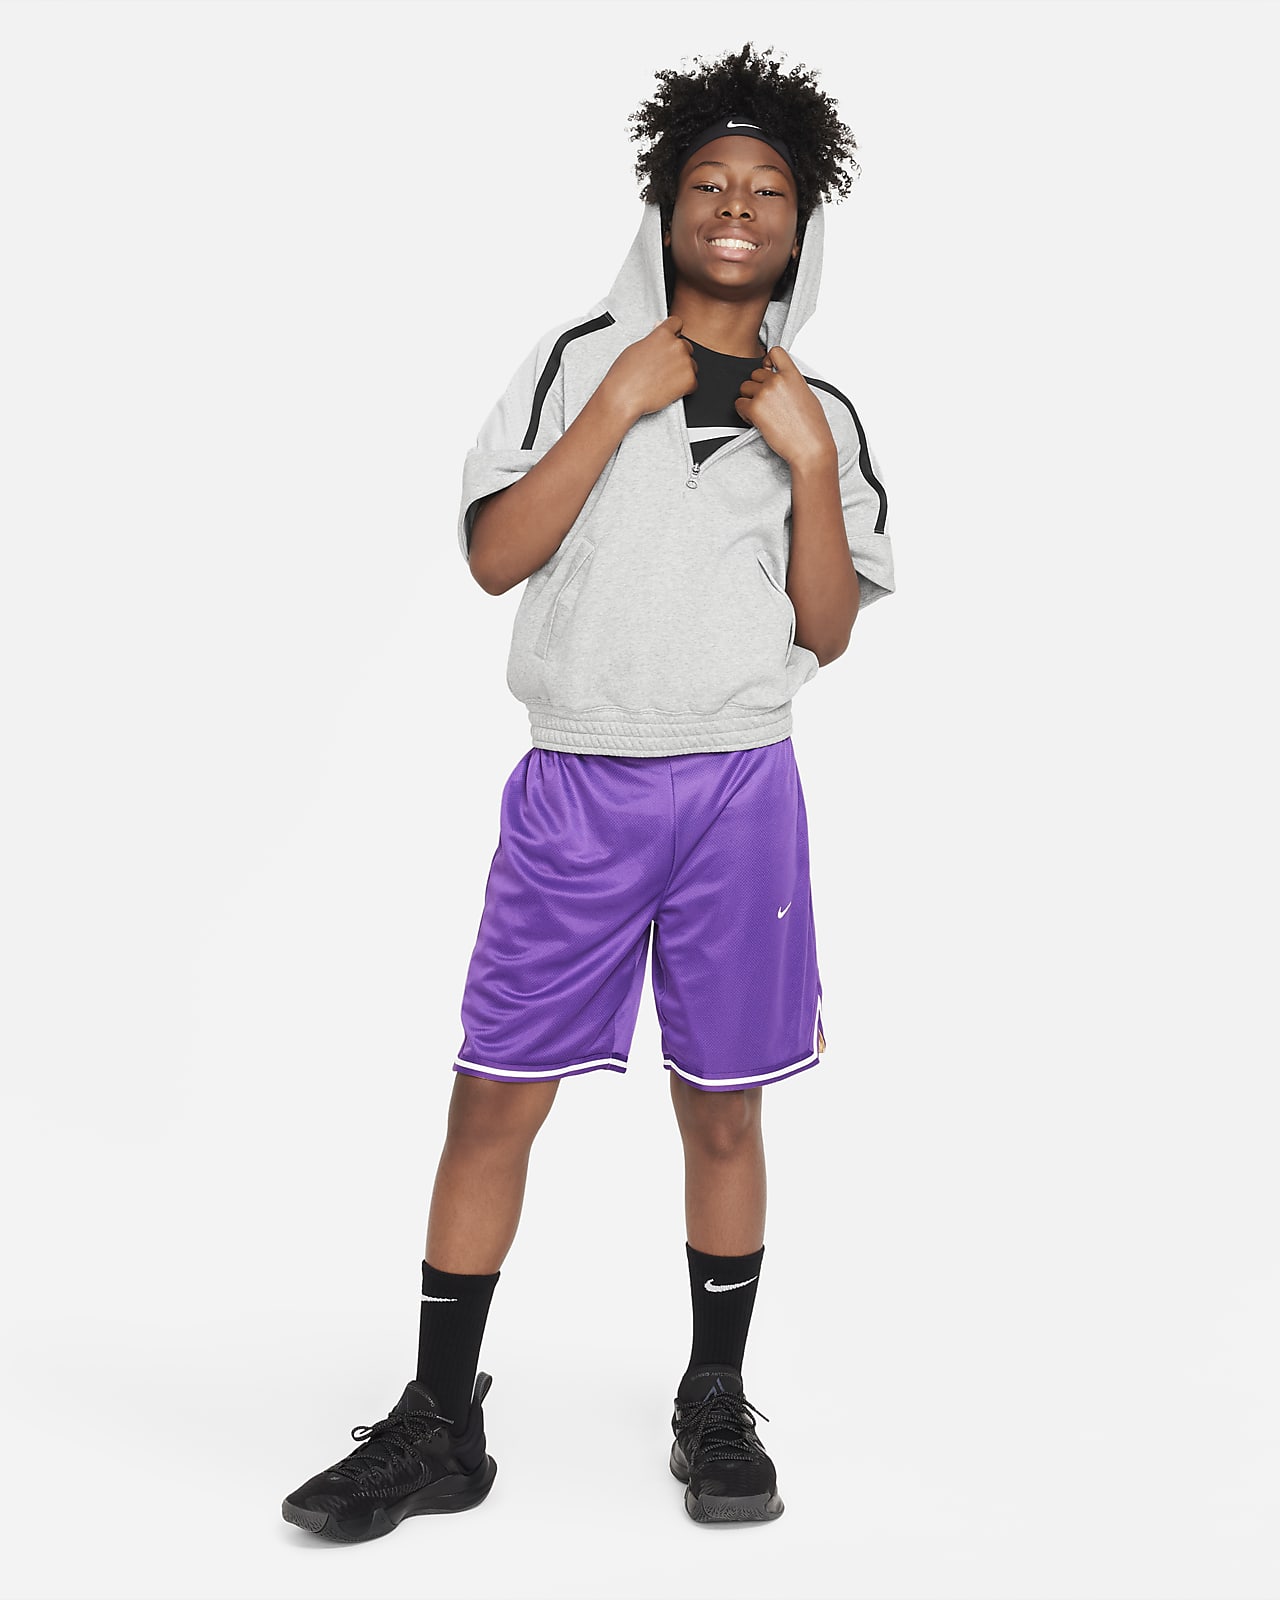 Nike Culture of Basketball DNA Older Kids' Reversible Basketball Shorts.  Nike IN